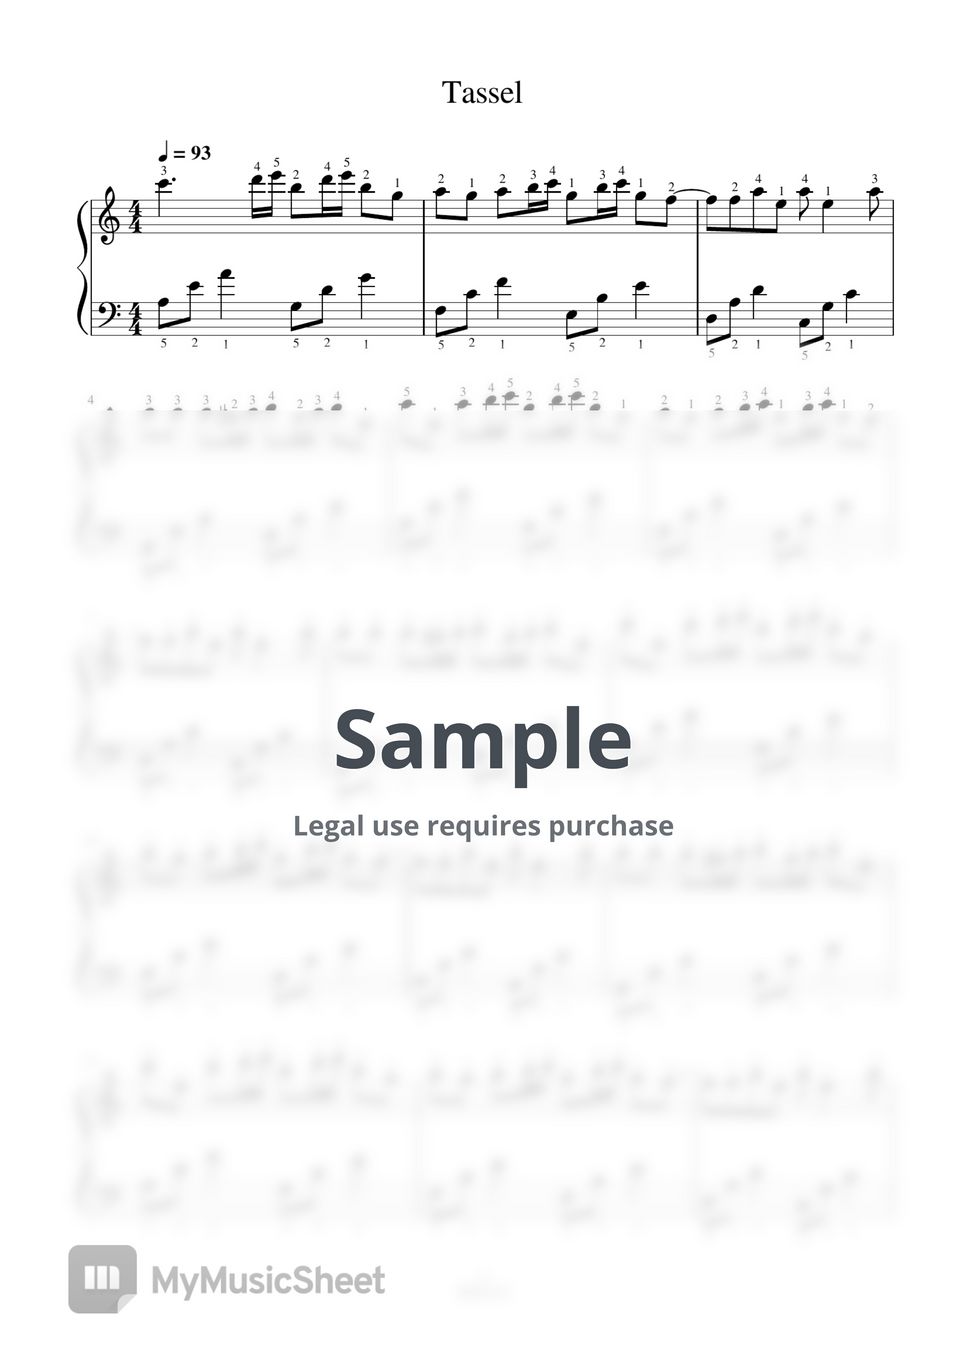 Cymophane - Tassel-全指法钢琴谱高清正版完整版 (Full Fingering Piano Score) by 紫韵音乐